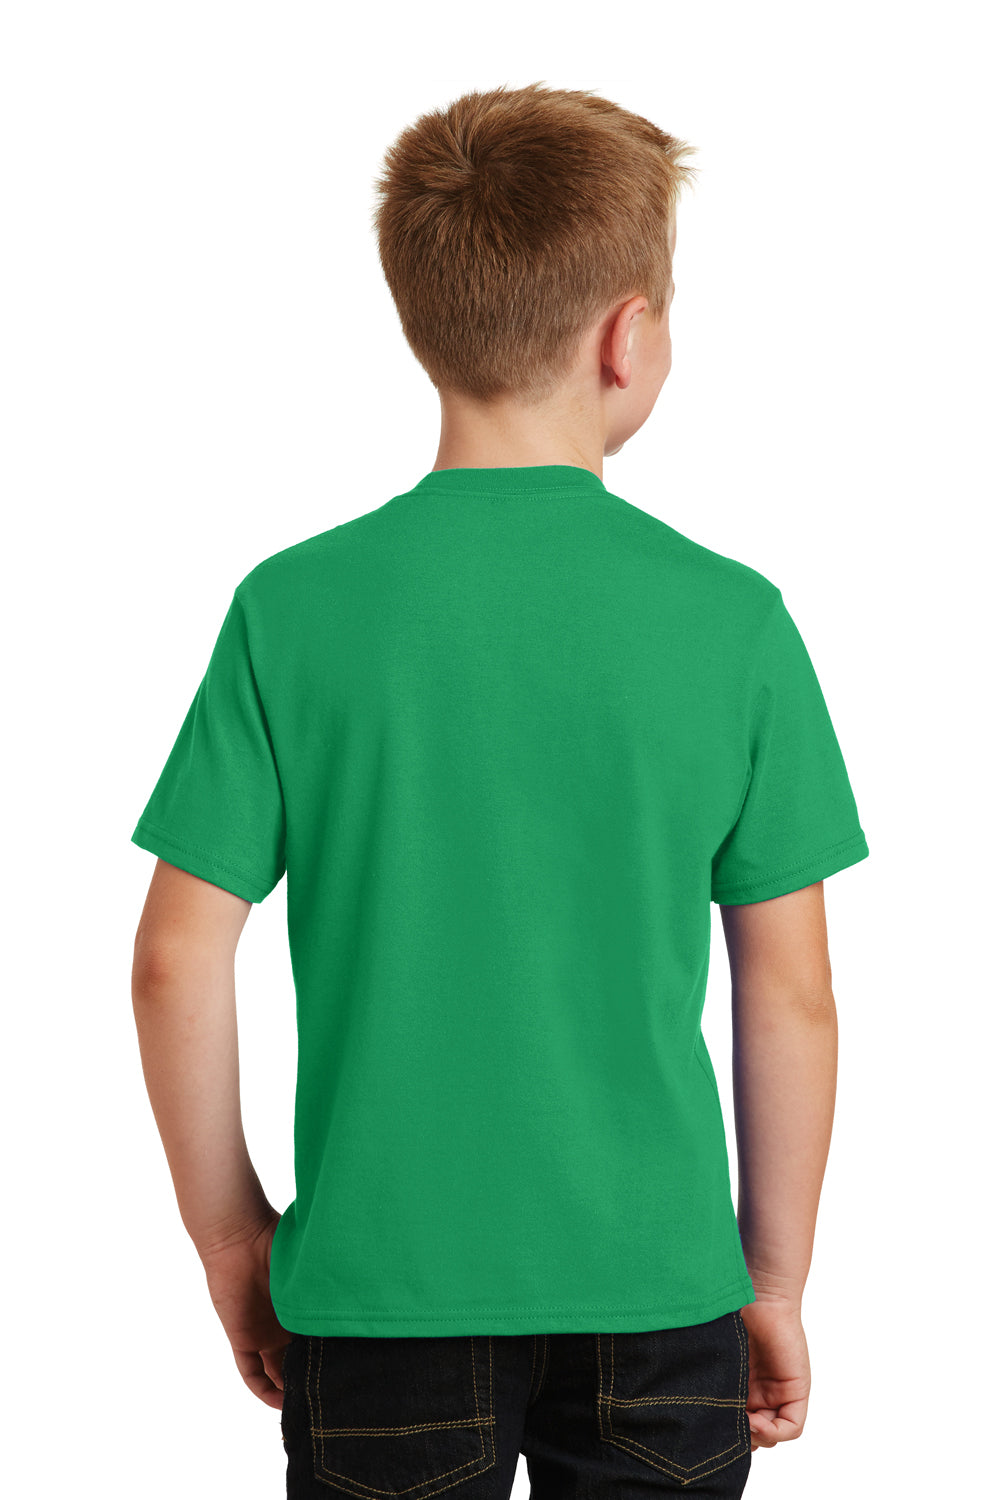 Port & Company PC450Y Youth Fan Favorite Short Sleeve Crewneck T-Shirt Kelly Green Back